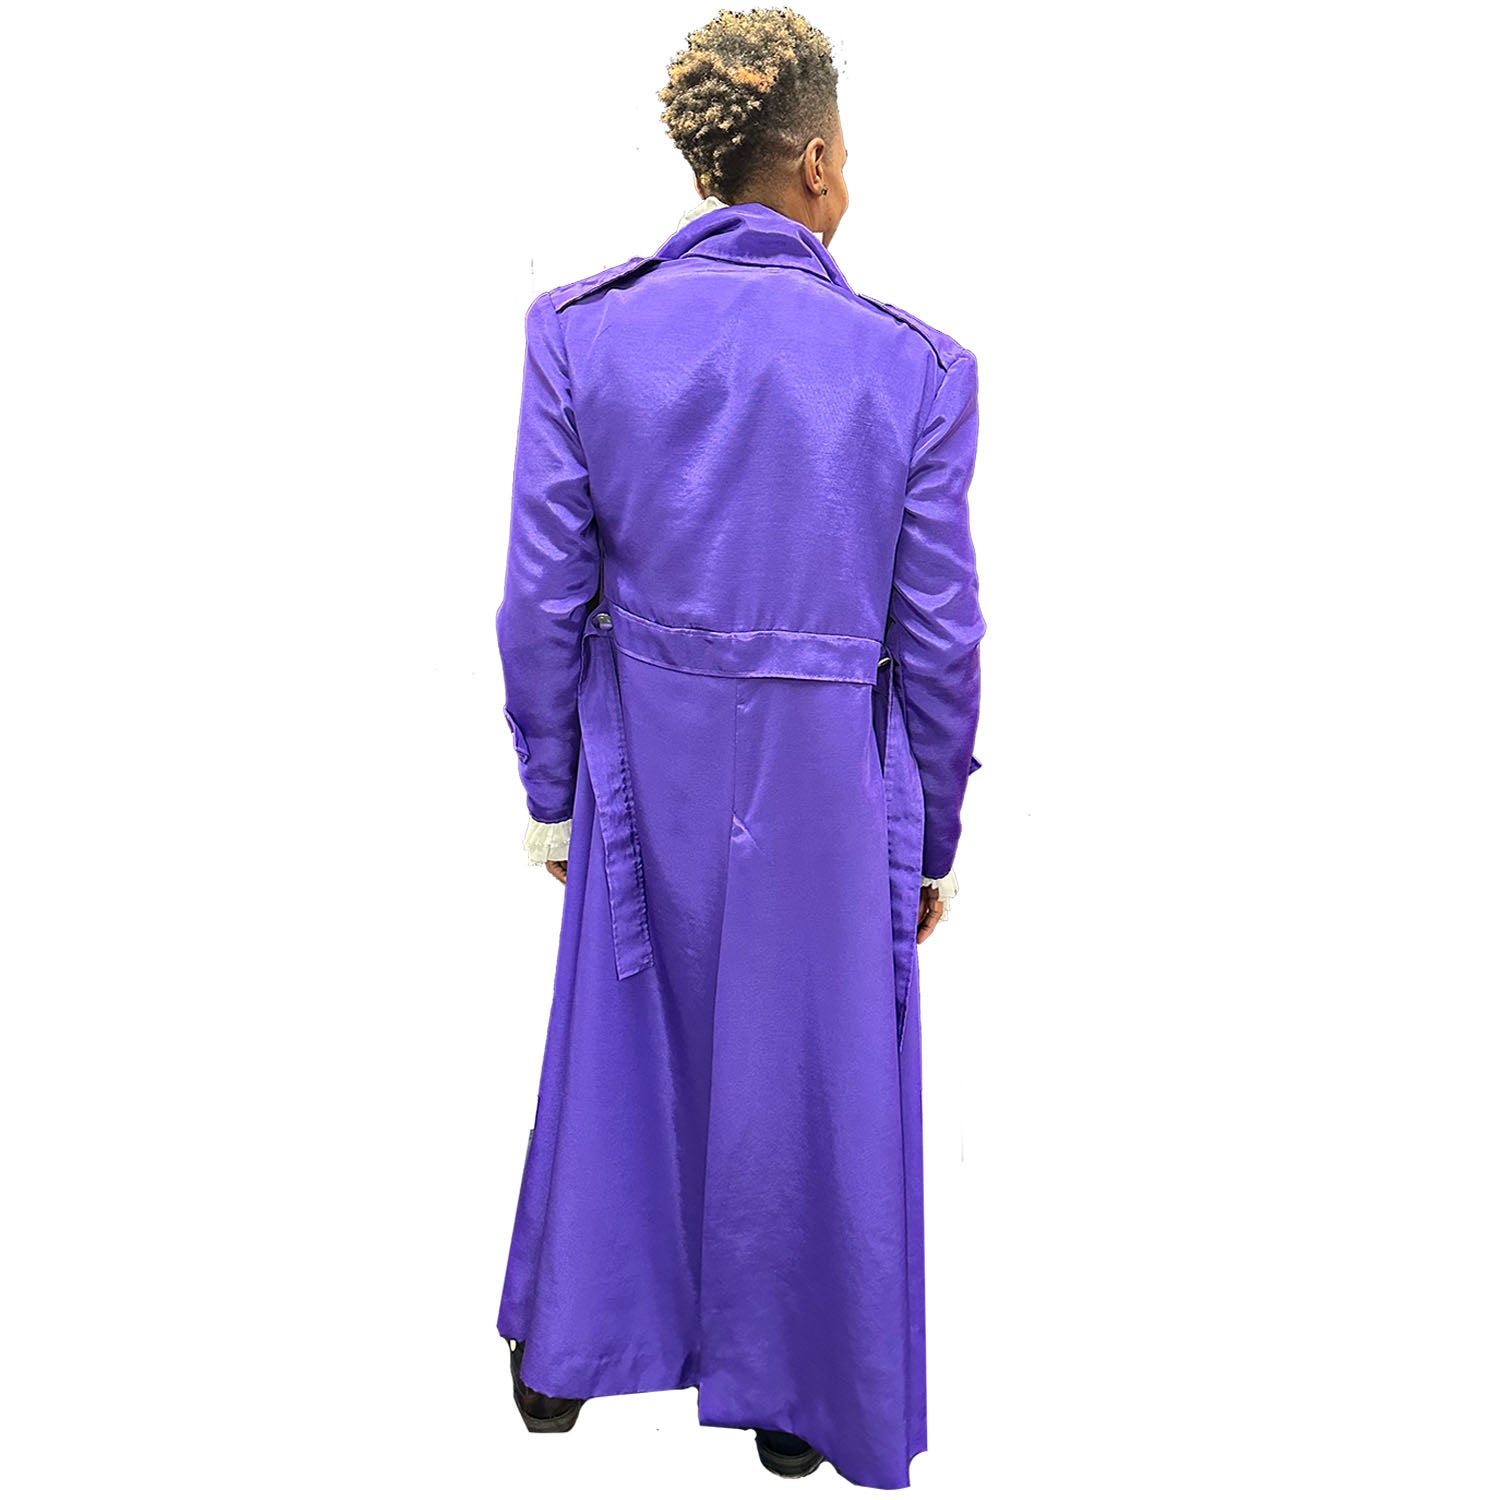 Deluxe Purple Prince Adult Costume Rental